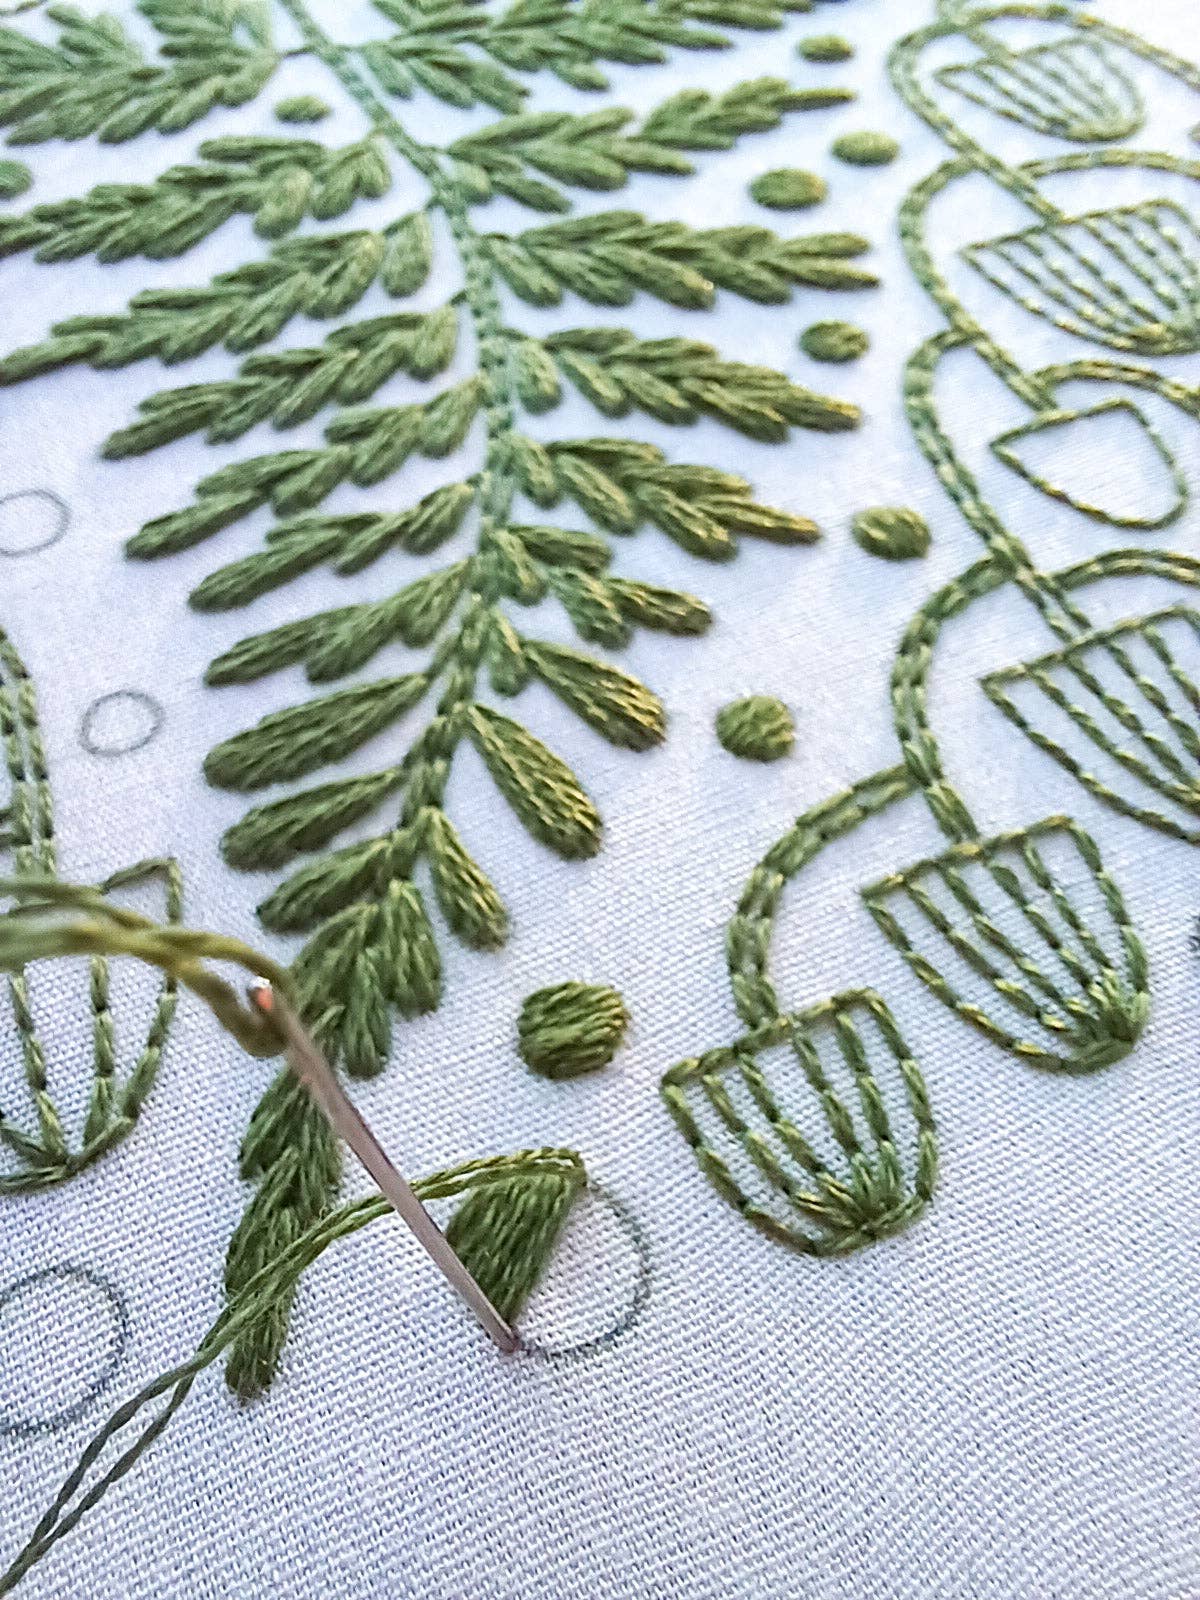 Fern + Friends - Cozyblue Handmade Embroidery Kit